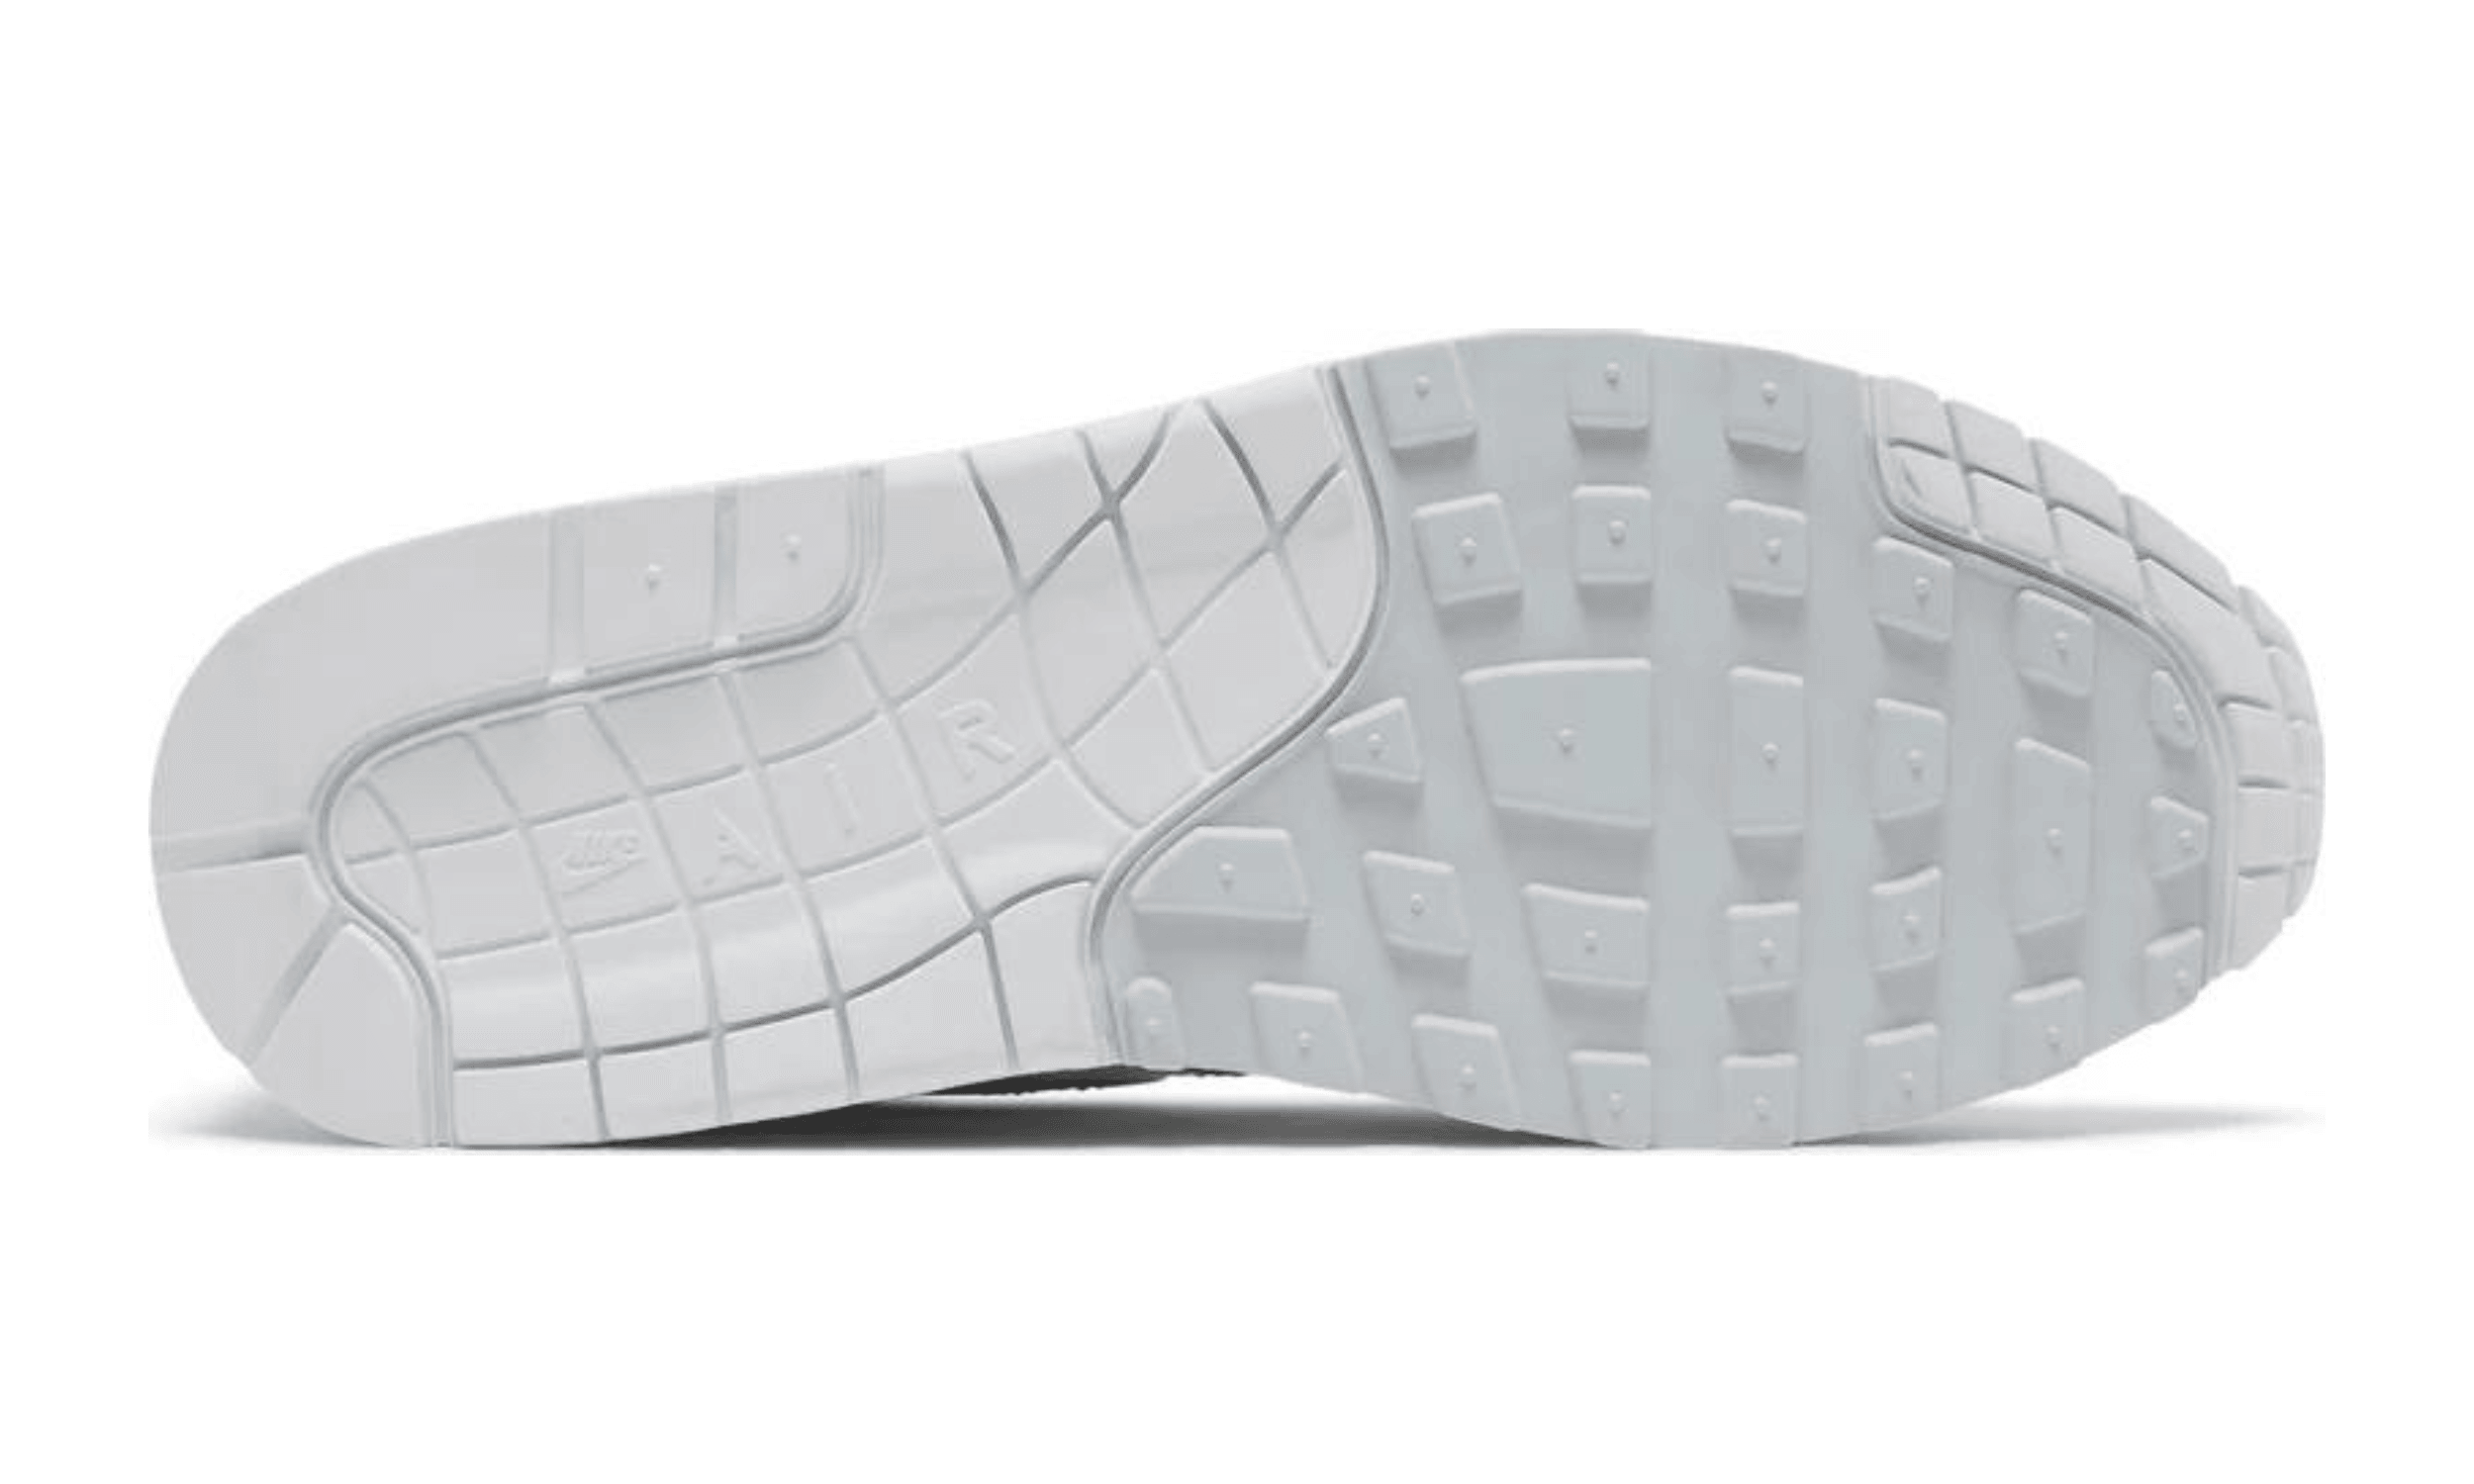 Nike Air Max 1 Patta Waves White - Kicksite